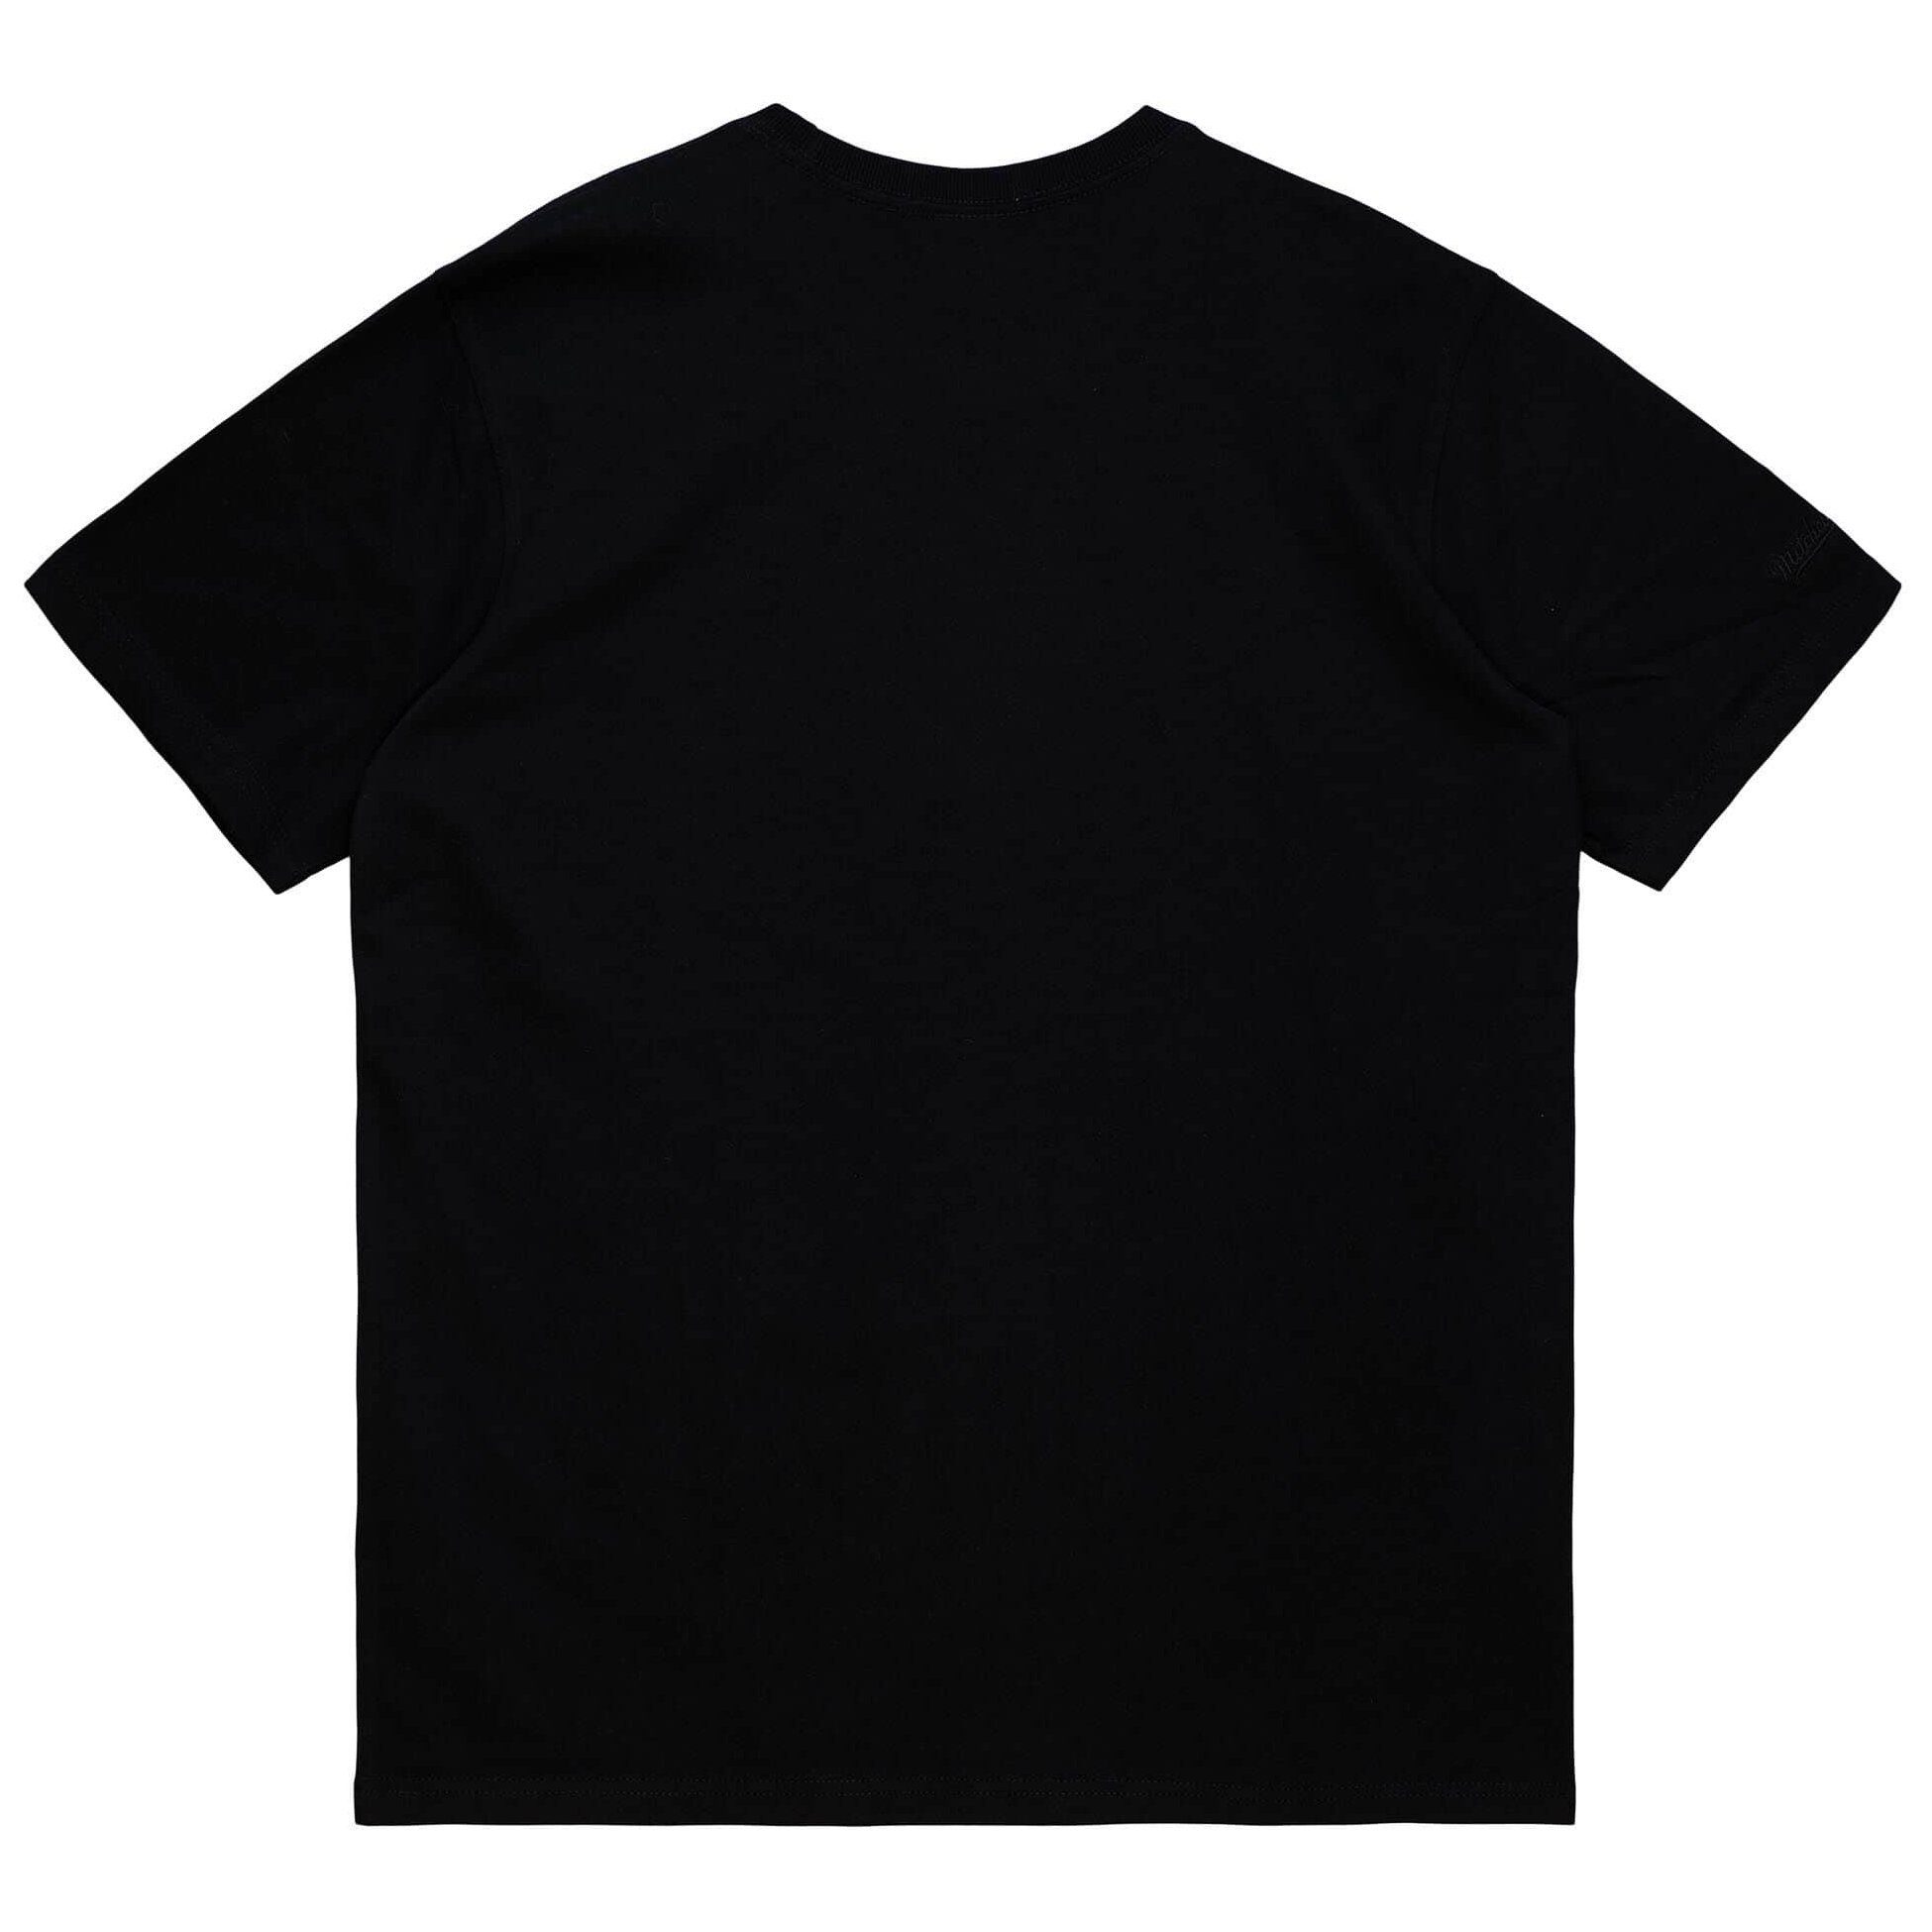 Mitchell FACE Bulls BIG Ness Print-Shirt 4.0 & Chicago